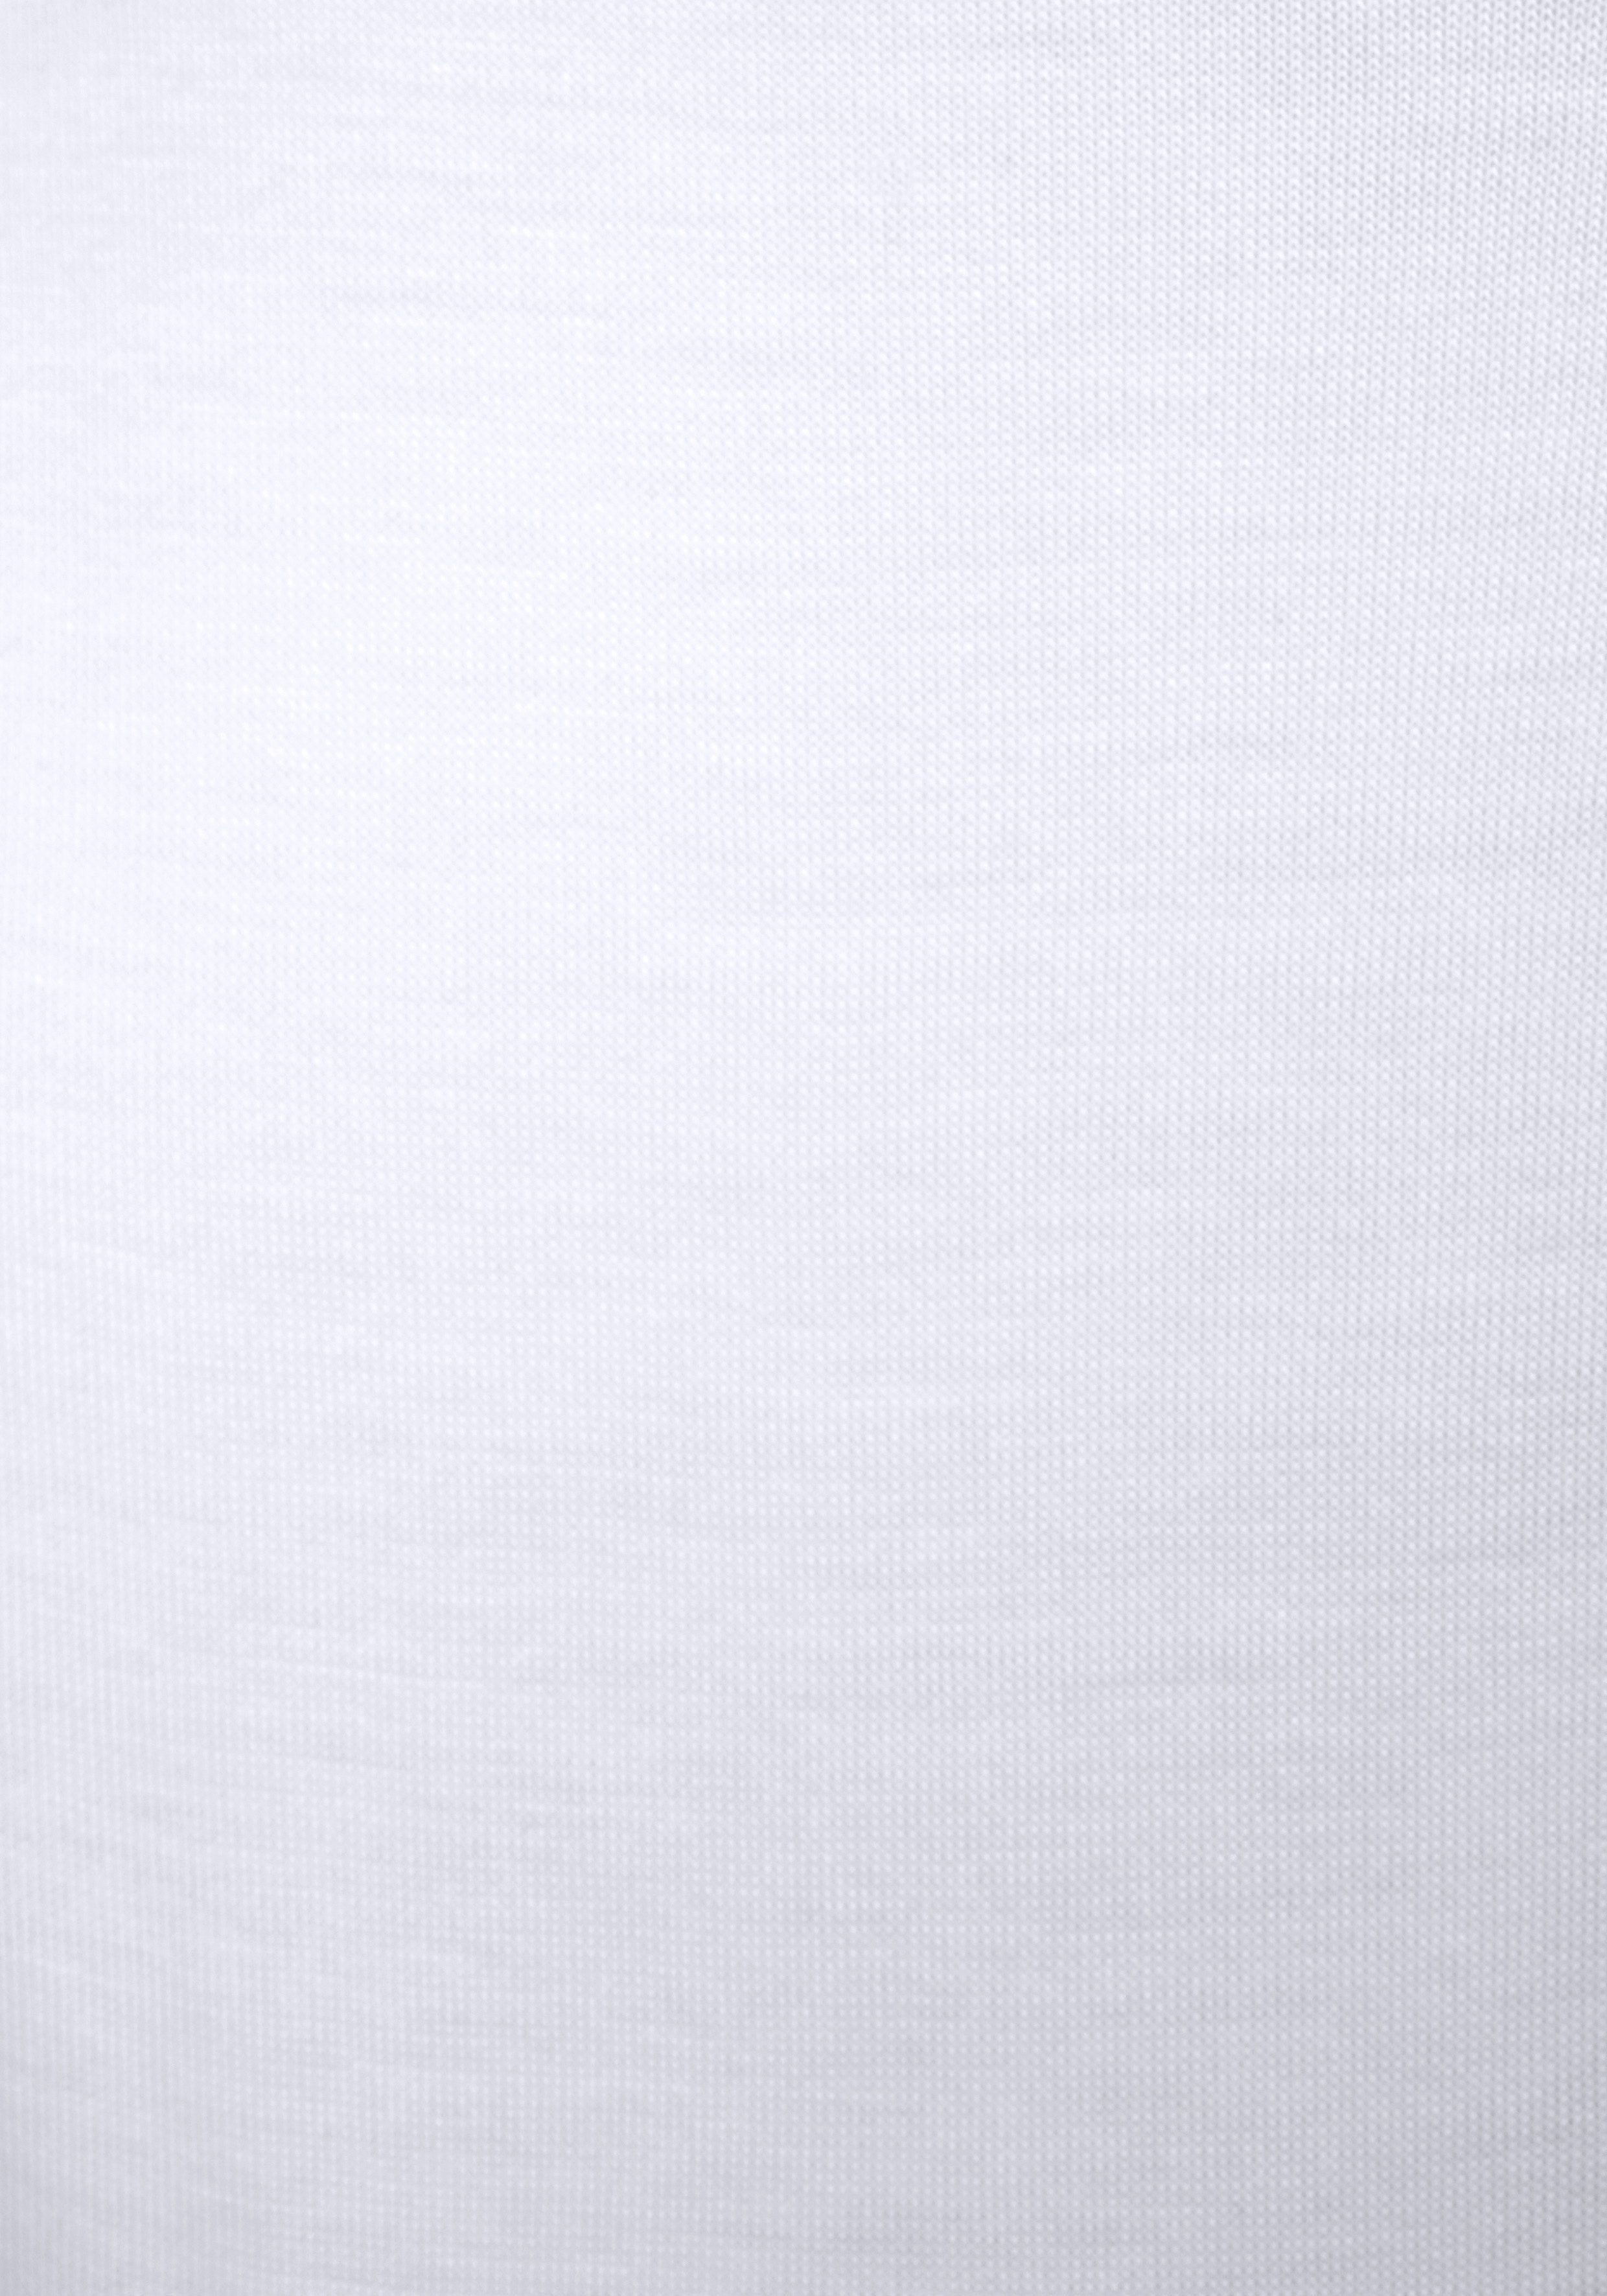 LASCANA Shirtjacke in offener weiß Form